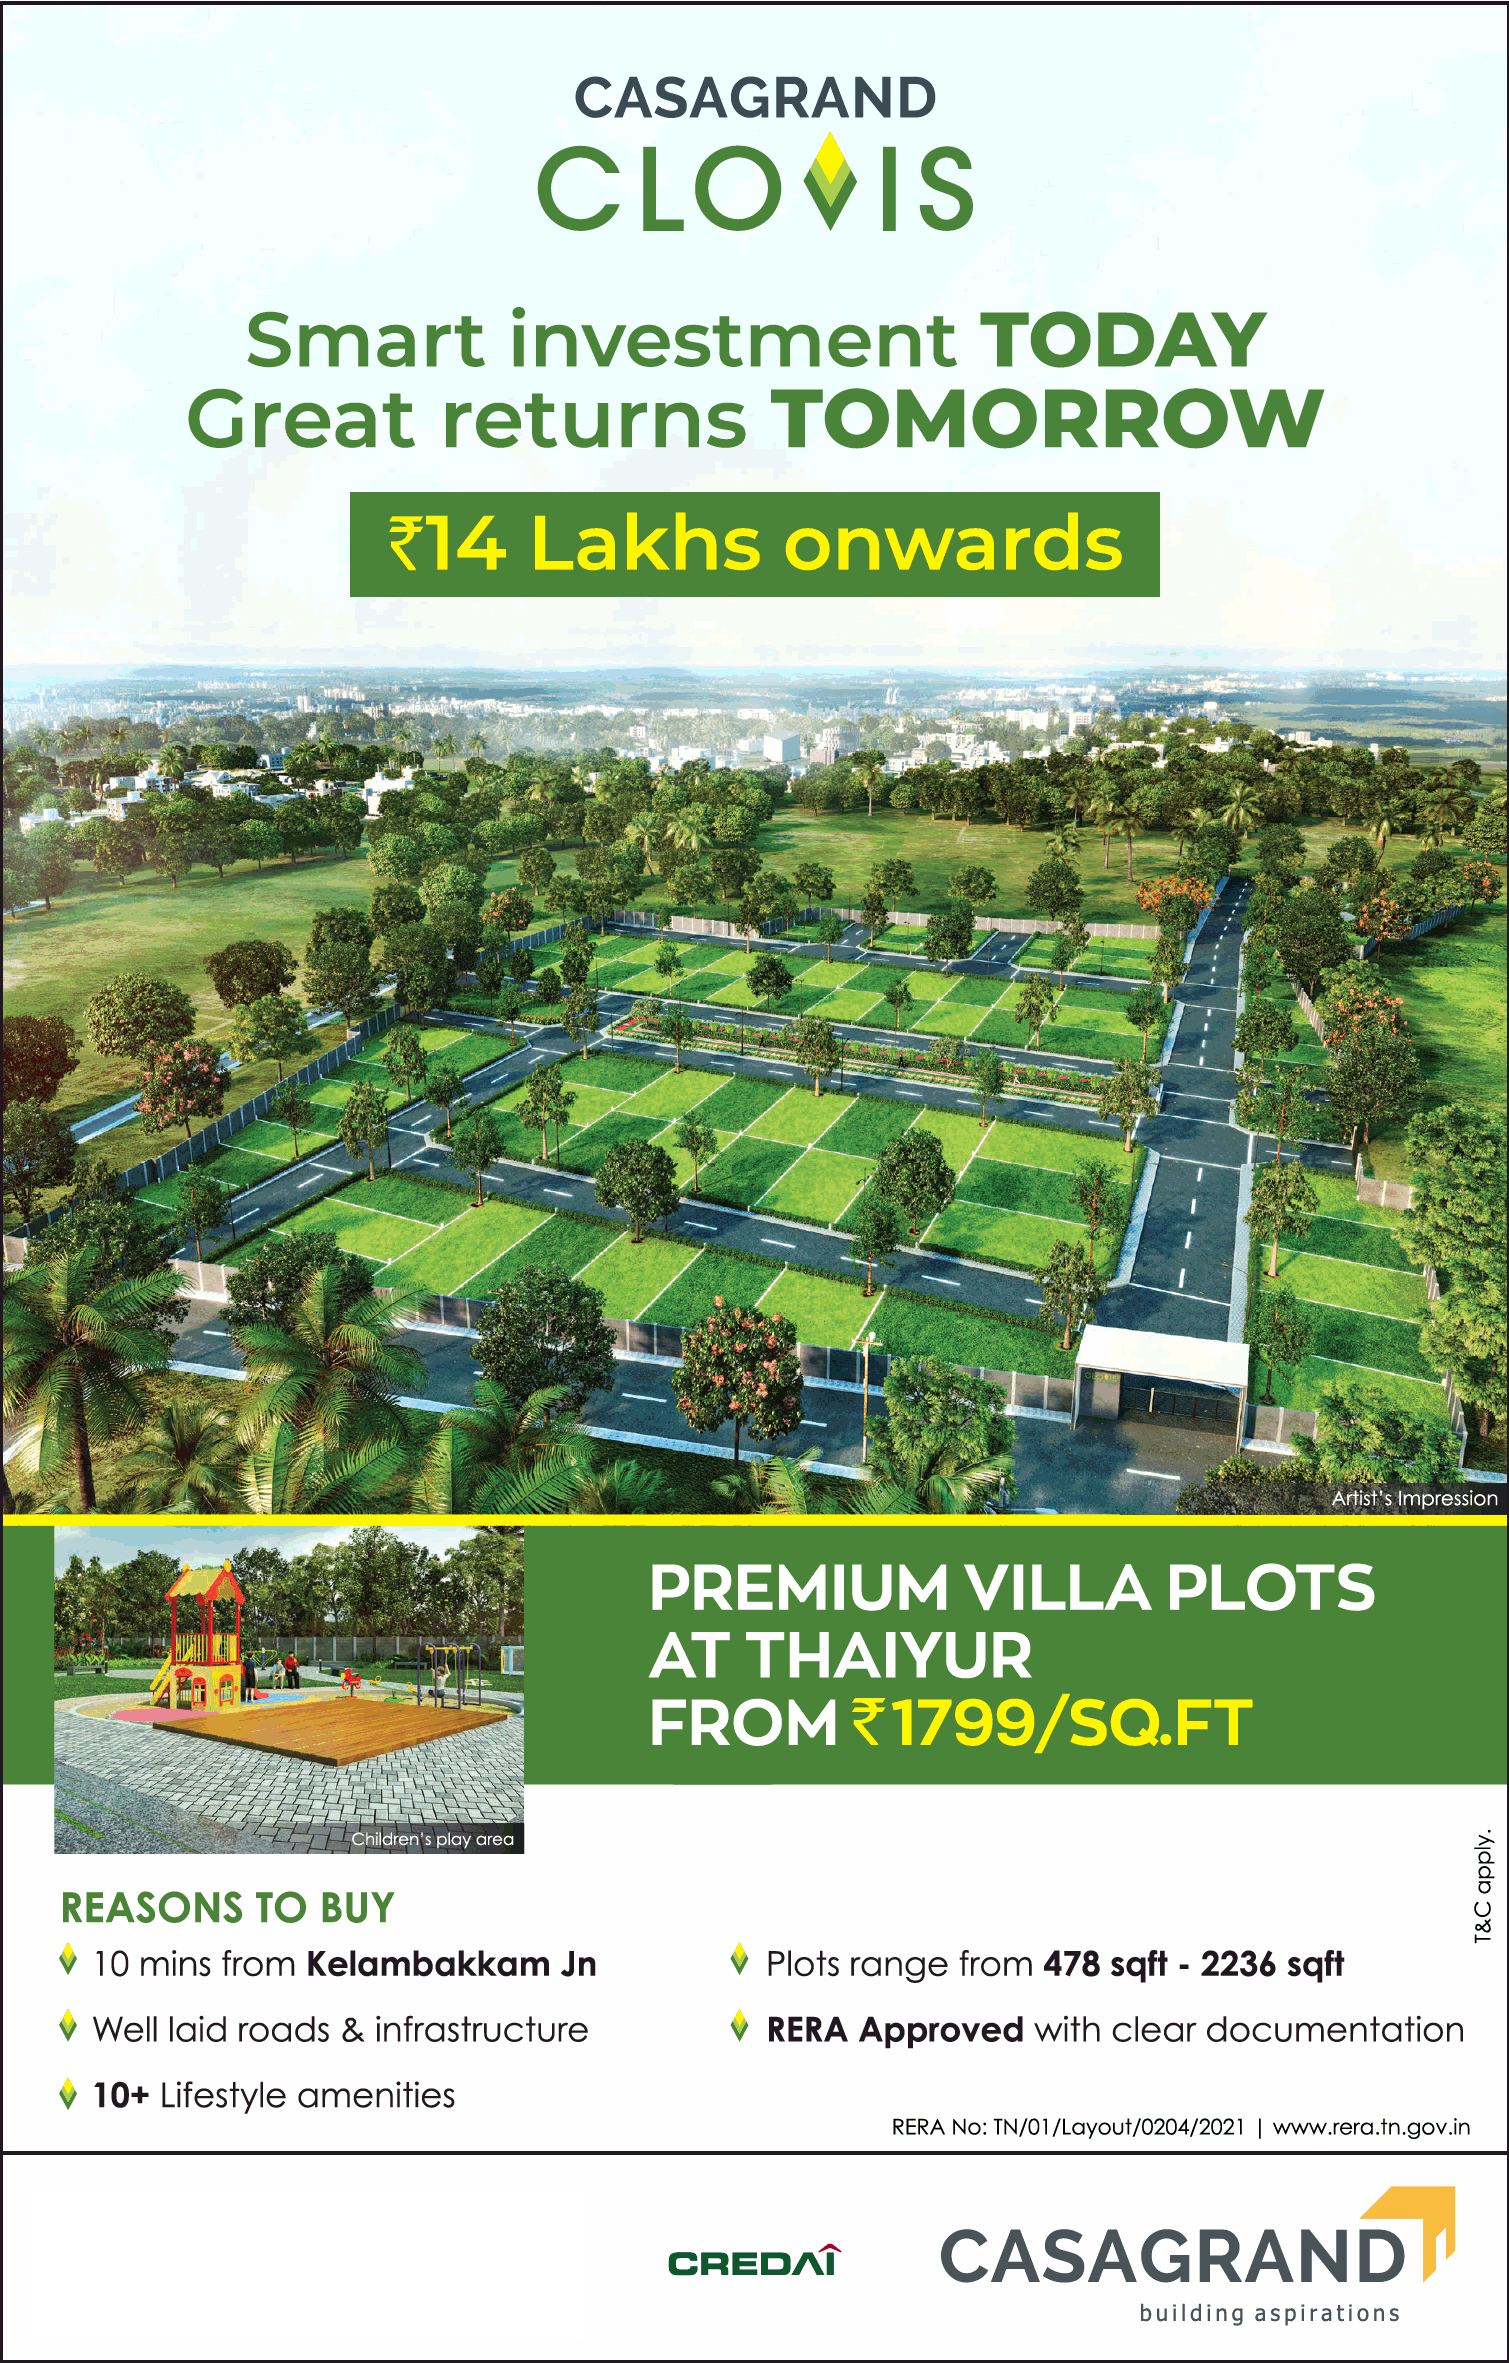 Premium villa plots from Rs 1799 per sqft at Casagrand Clovis in Chennai Update